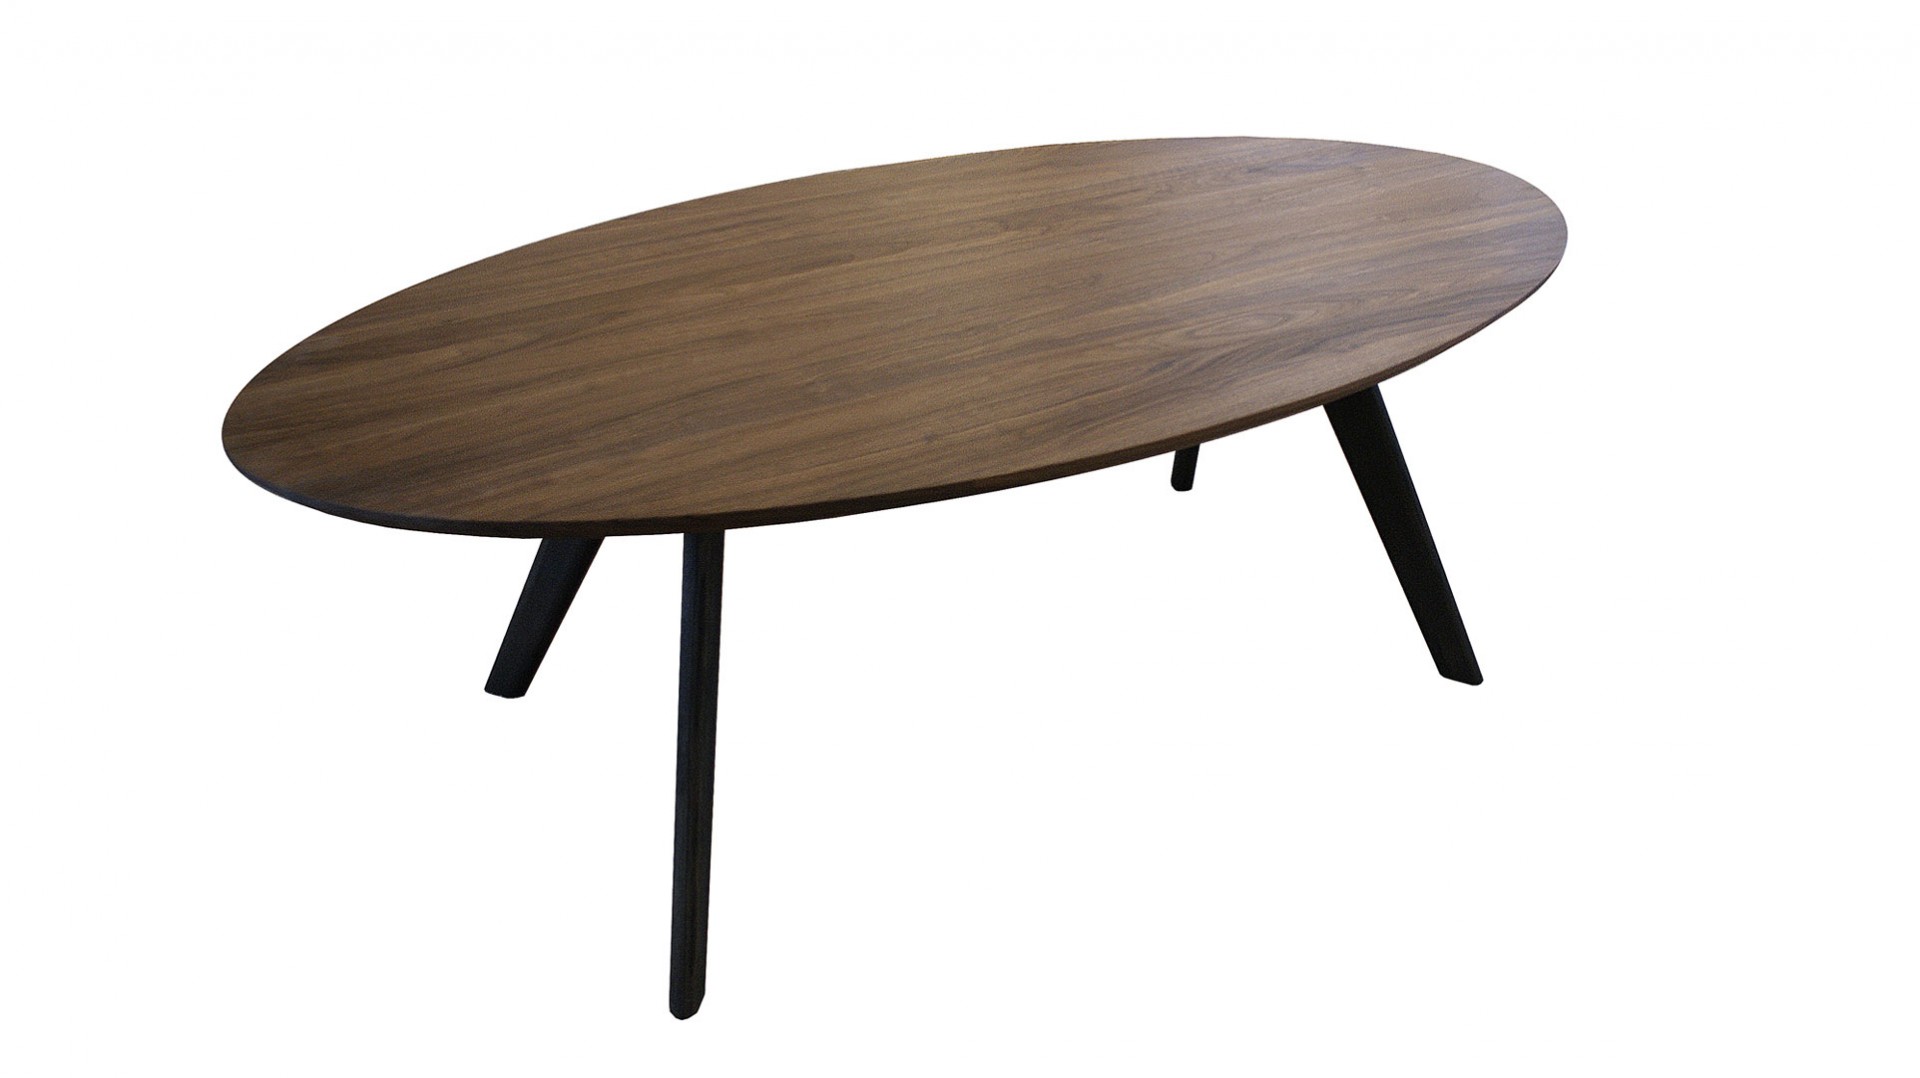 Jedálenský stôl ELYS, masívny orech, jedálenský stôl z masívneho dreva, jedálenský stôl cubica, masívny drevený stôl